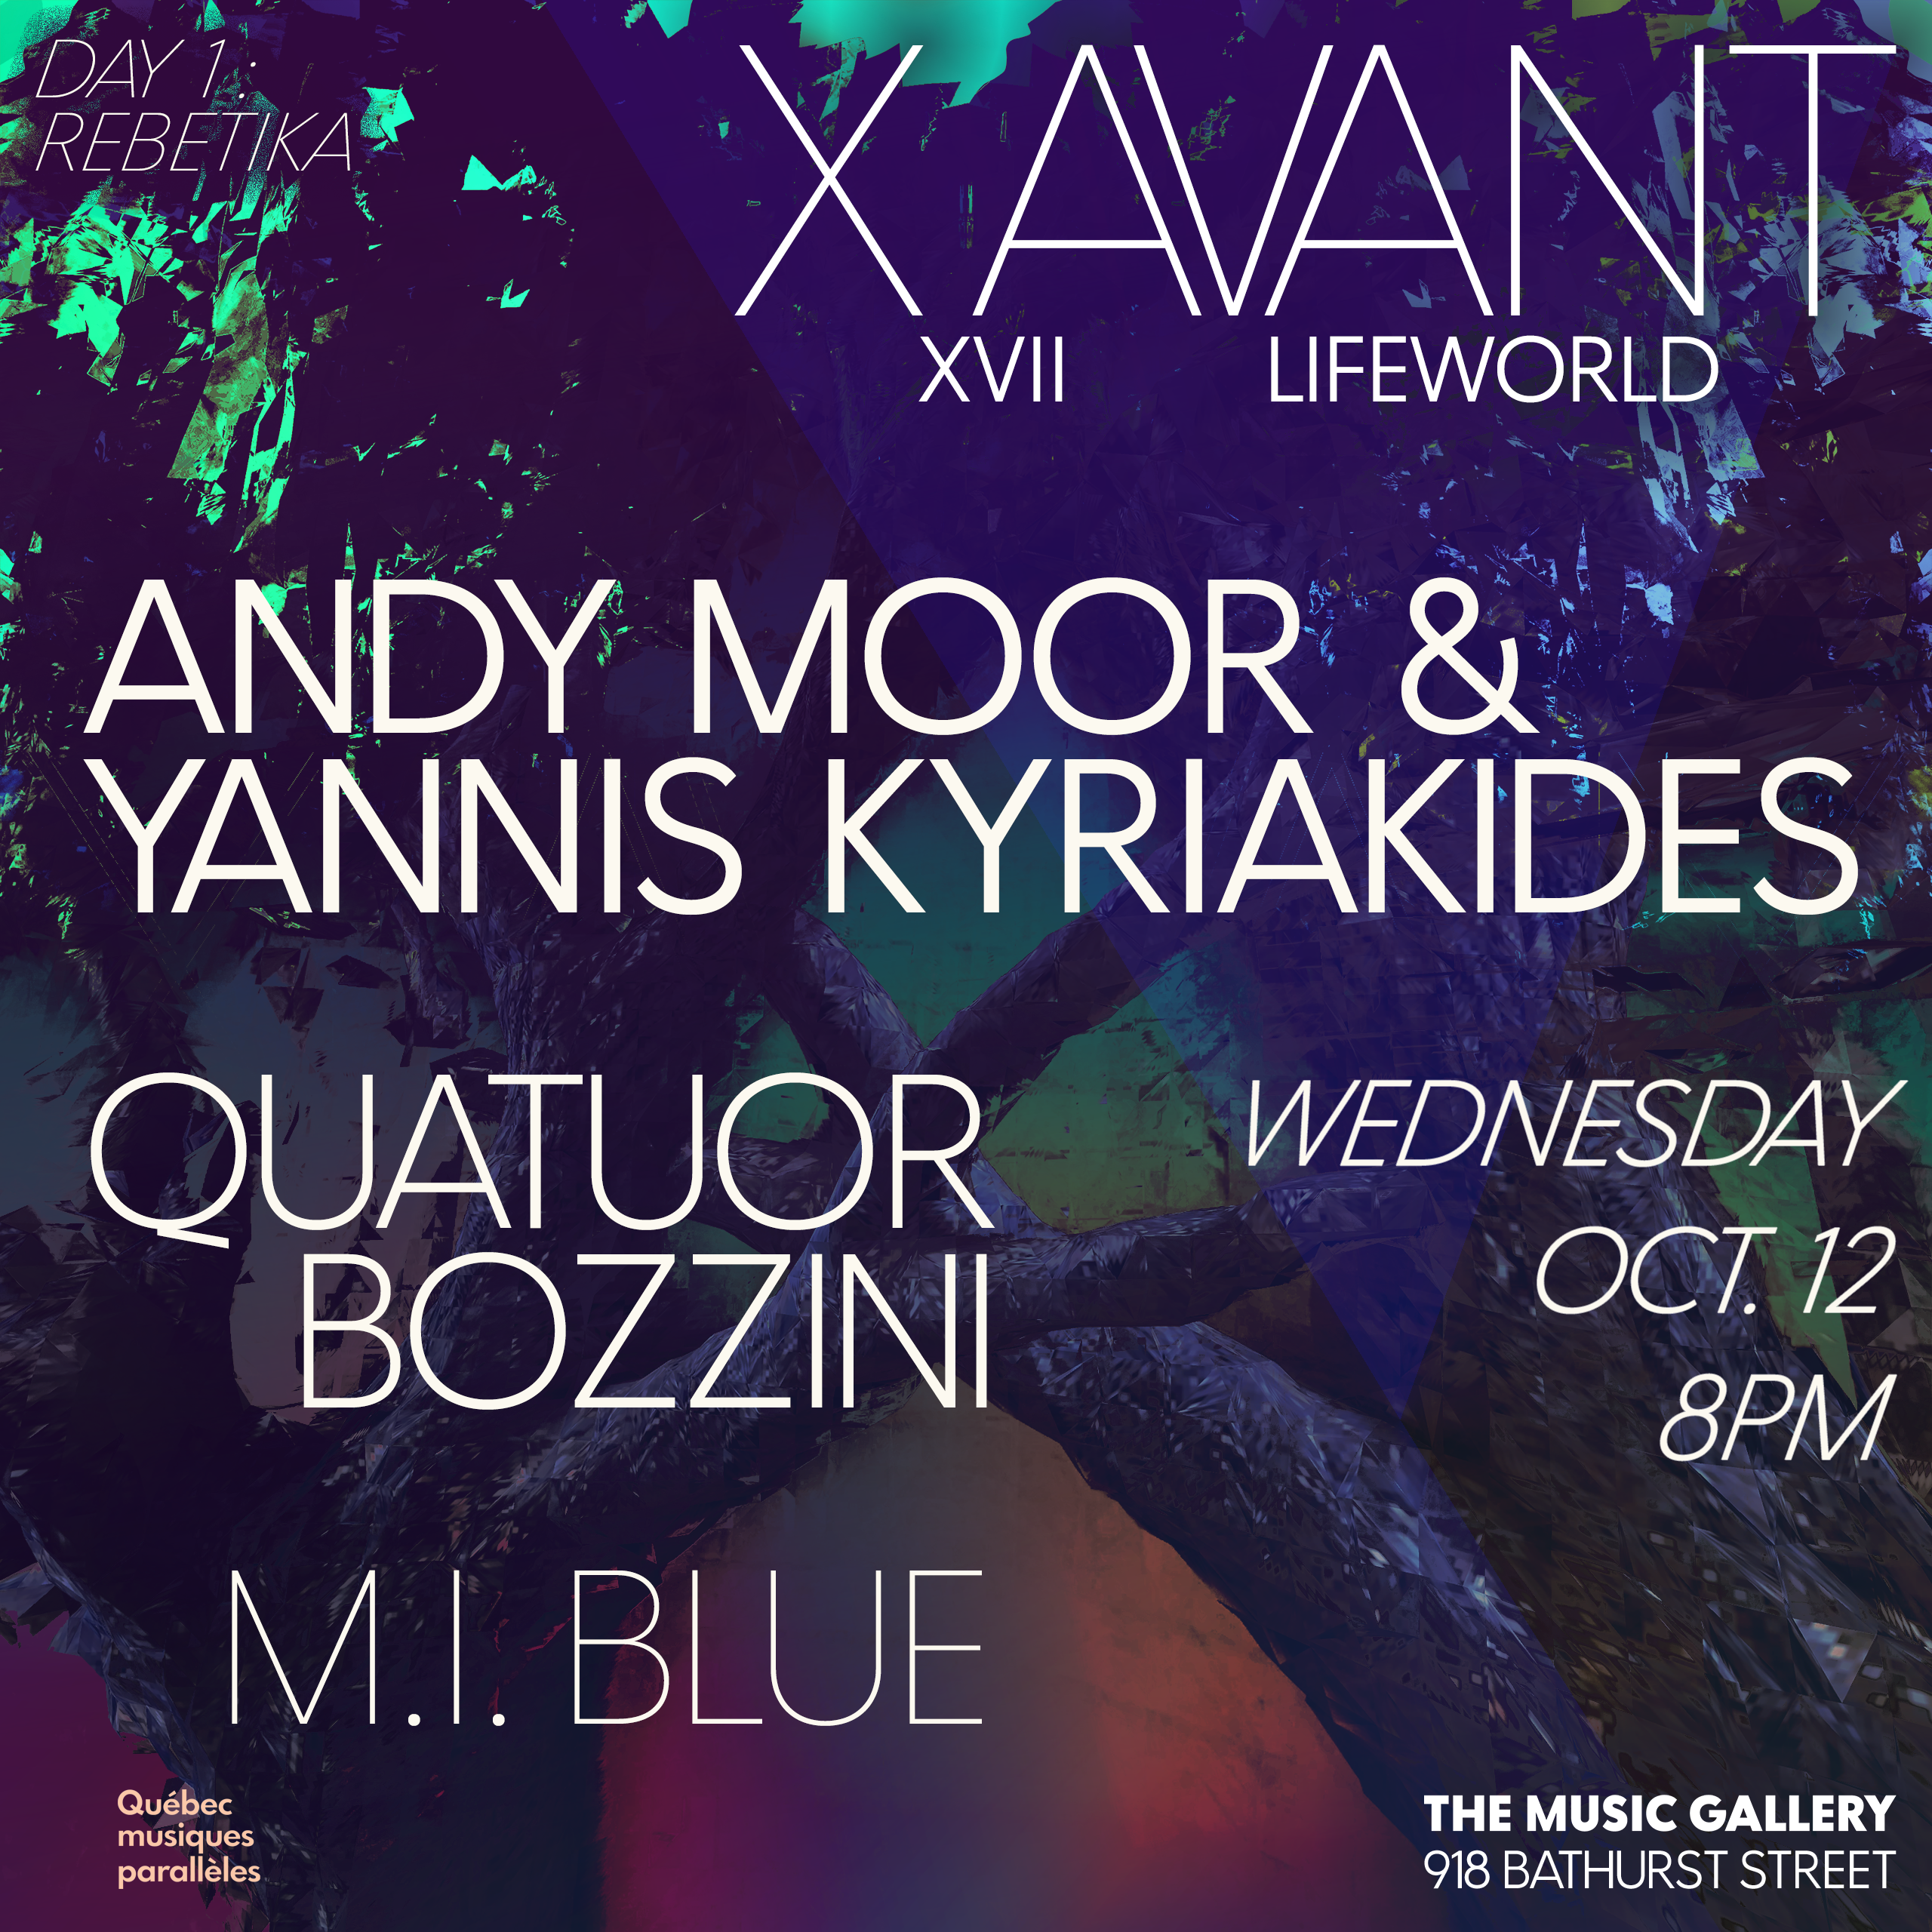 X Avant XVII: LifeWorld Day 1 Rebetika featuring Andy Moor & Yannis Kyriakides, Quatuor Bozzini, M.I. Blue, Oct 12 8pm